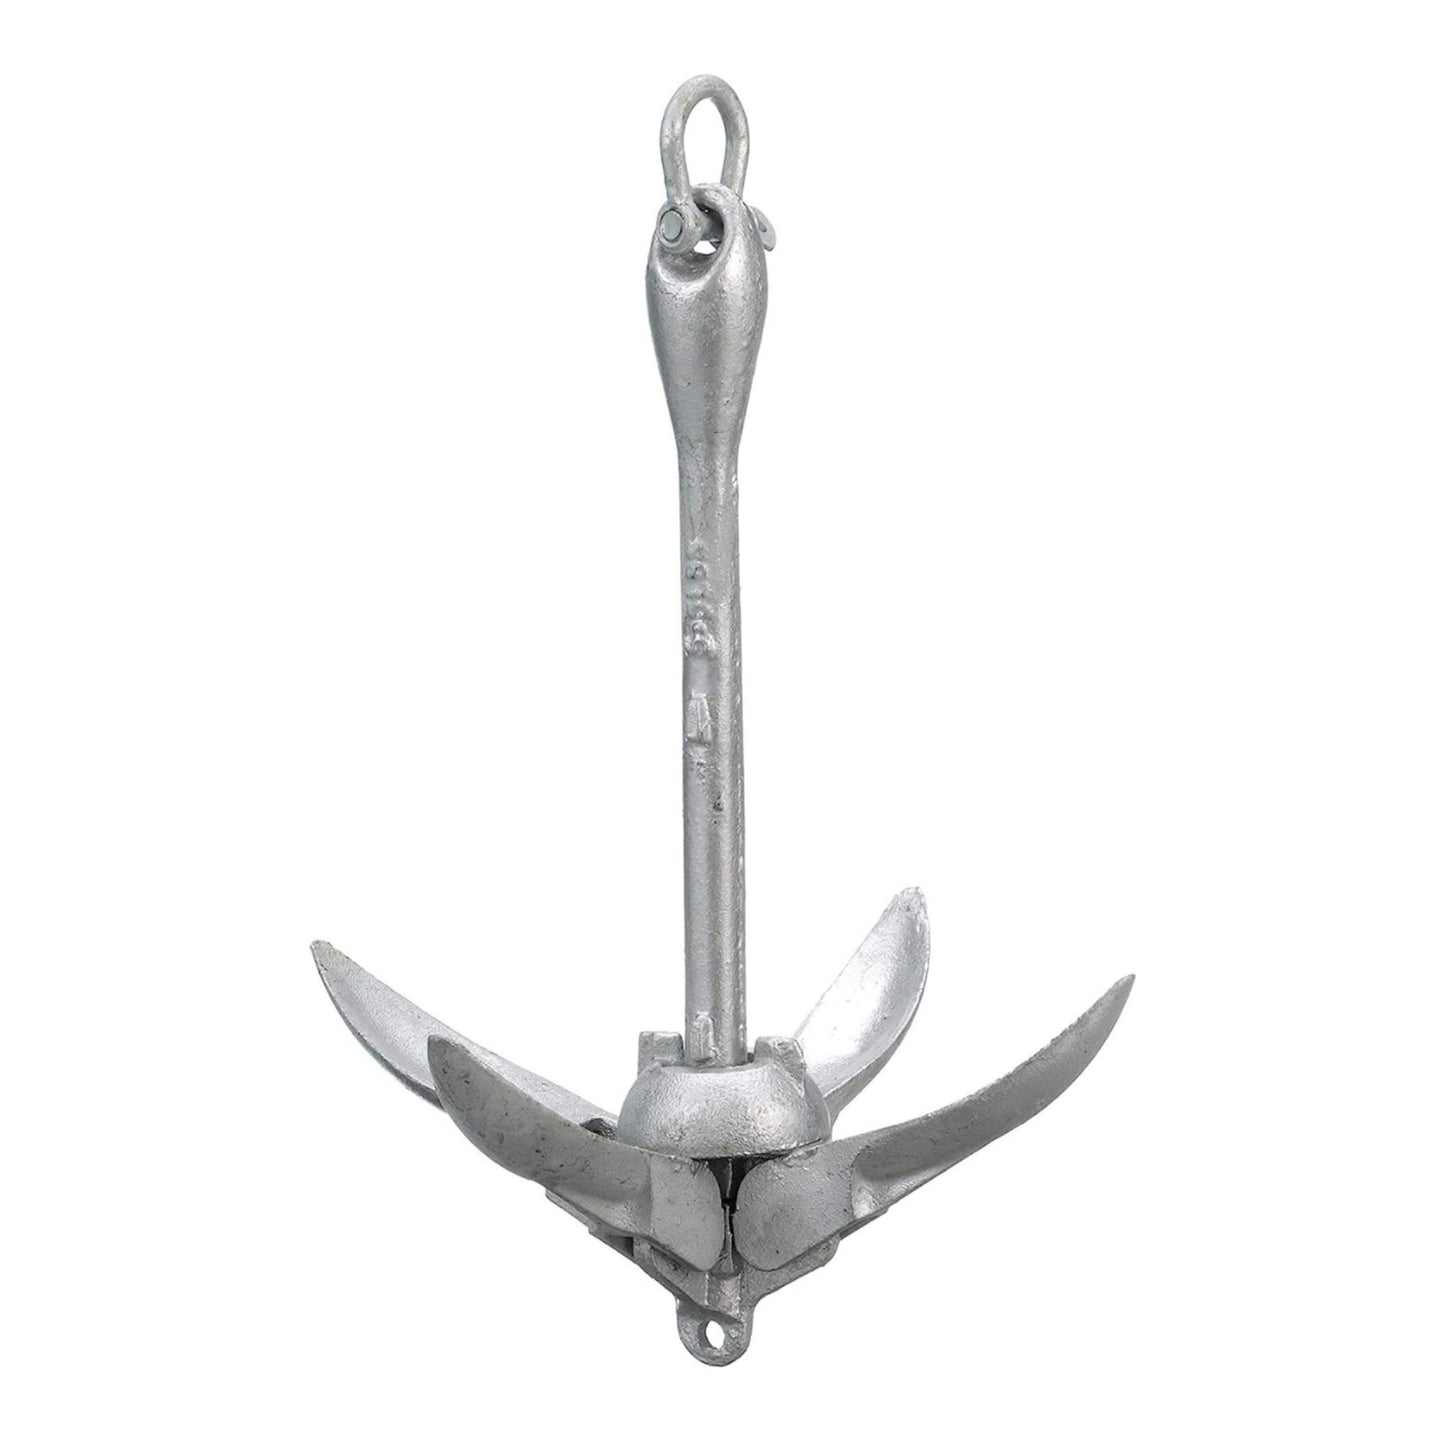 5.5lb folding grapnel anchor